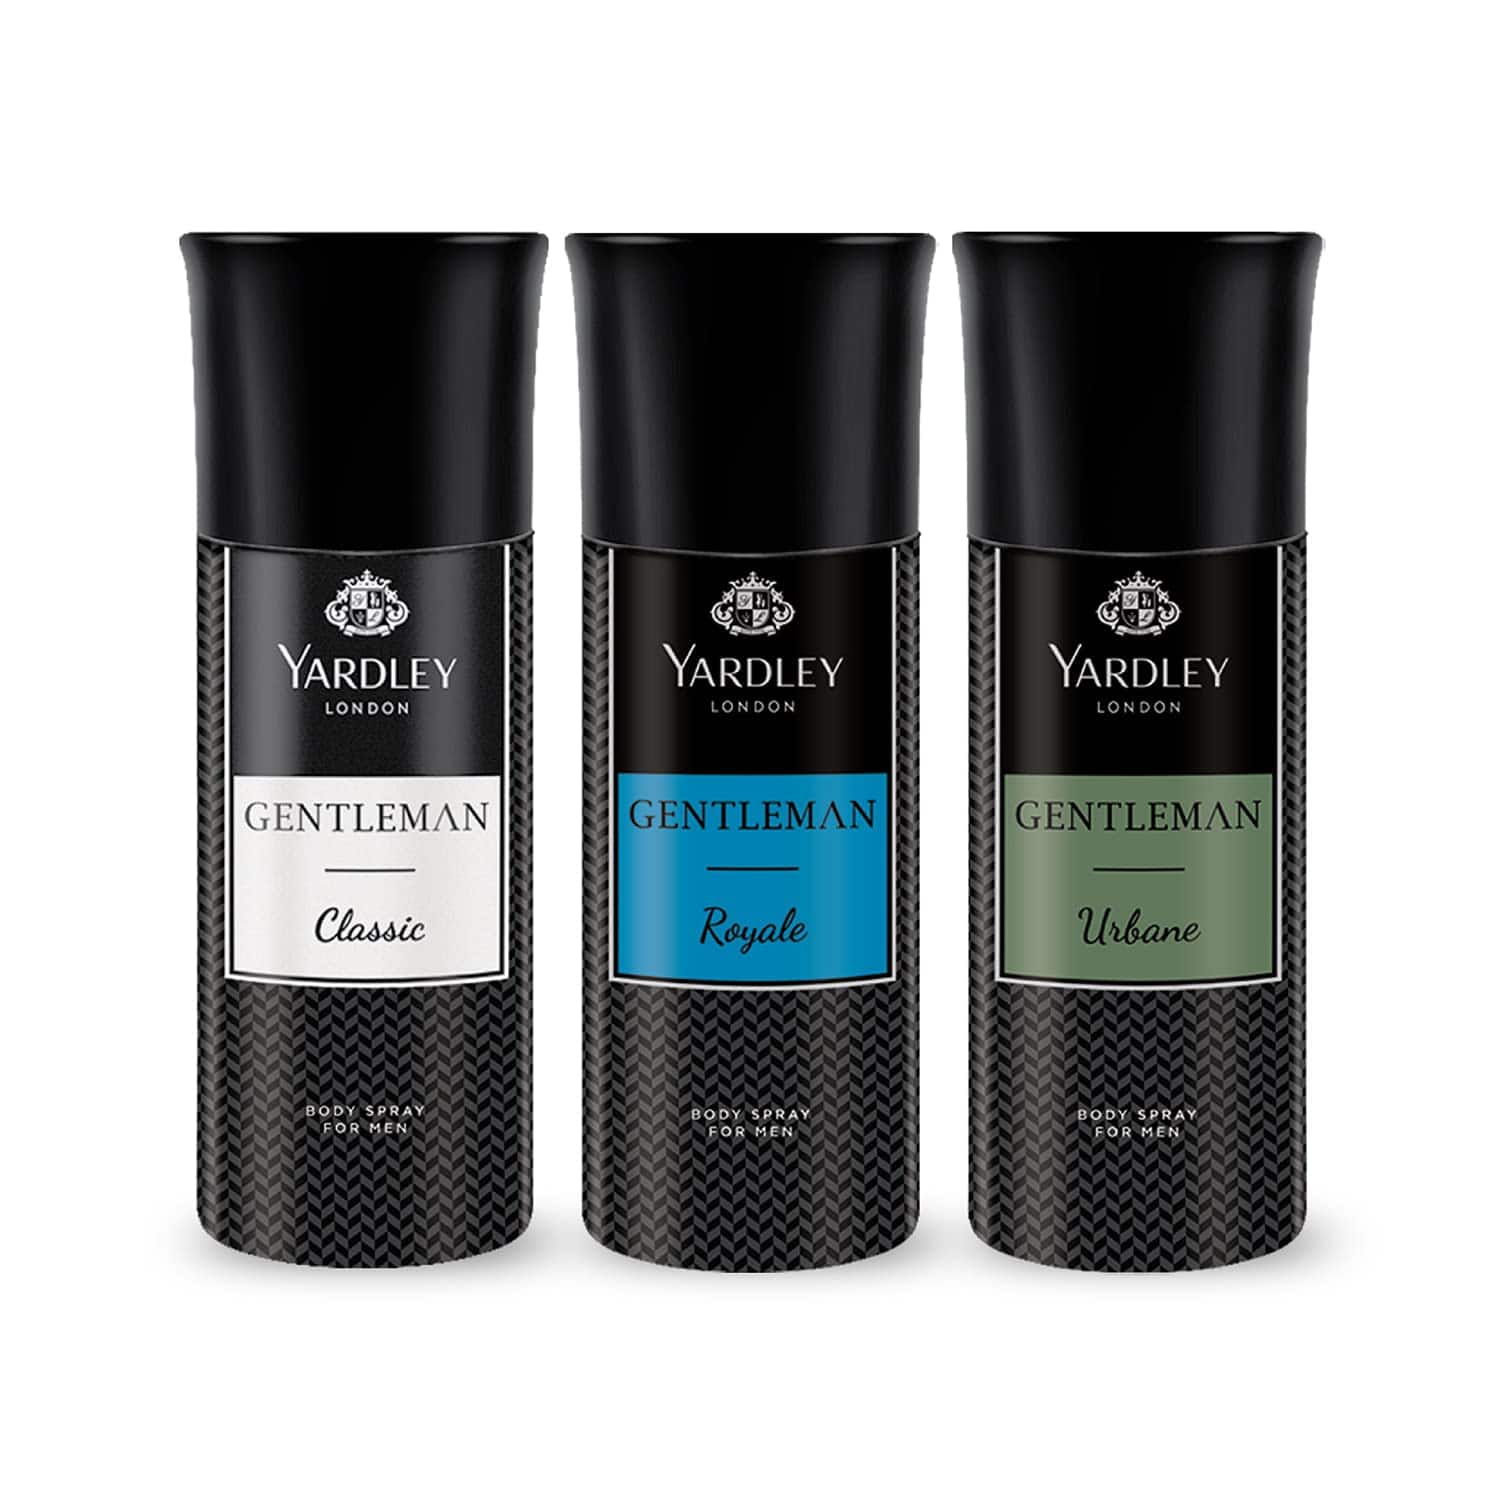 Yardley London Gentleman Deodorant Body Sprays for Men